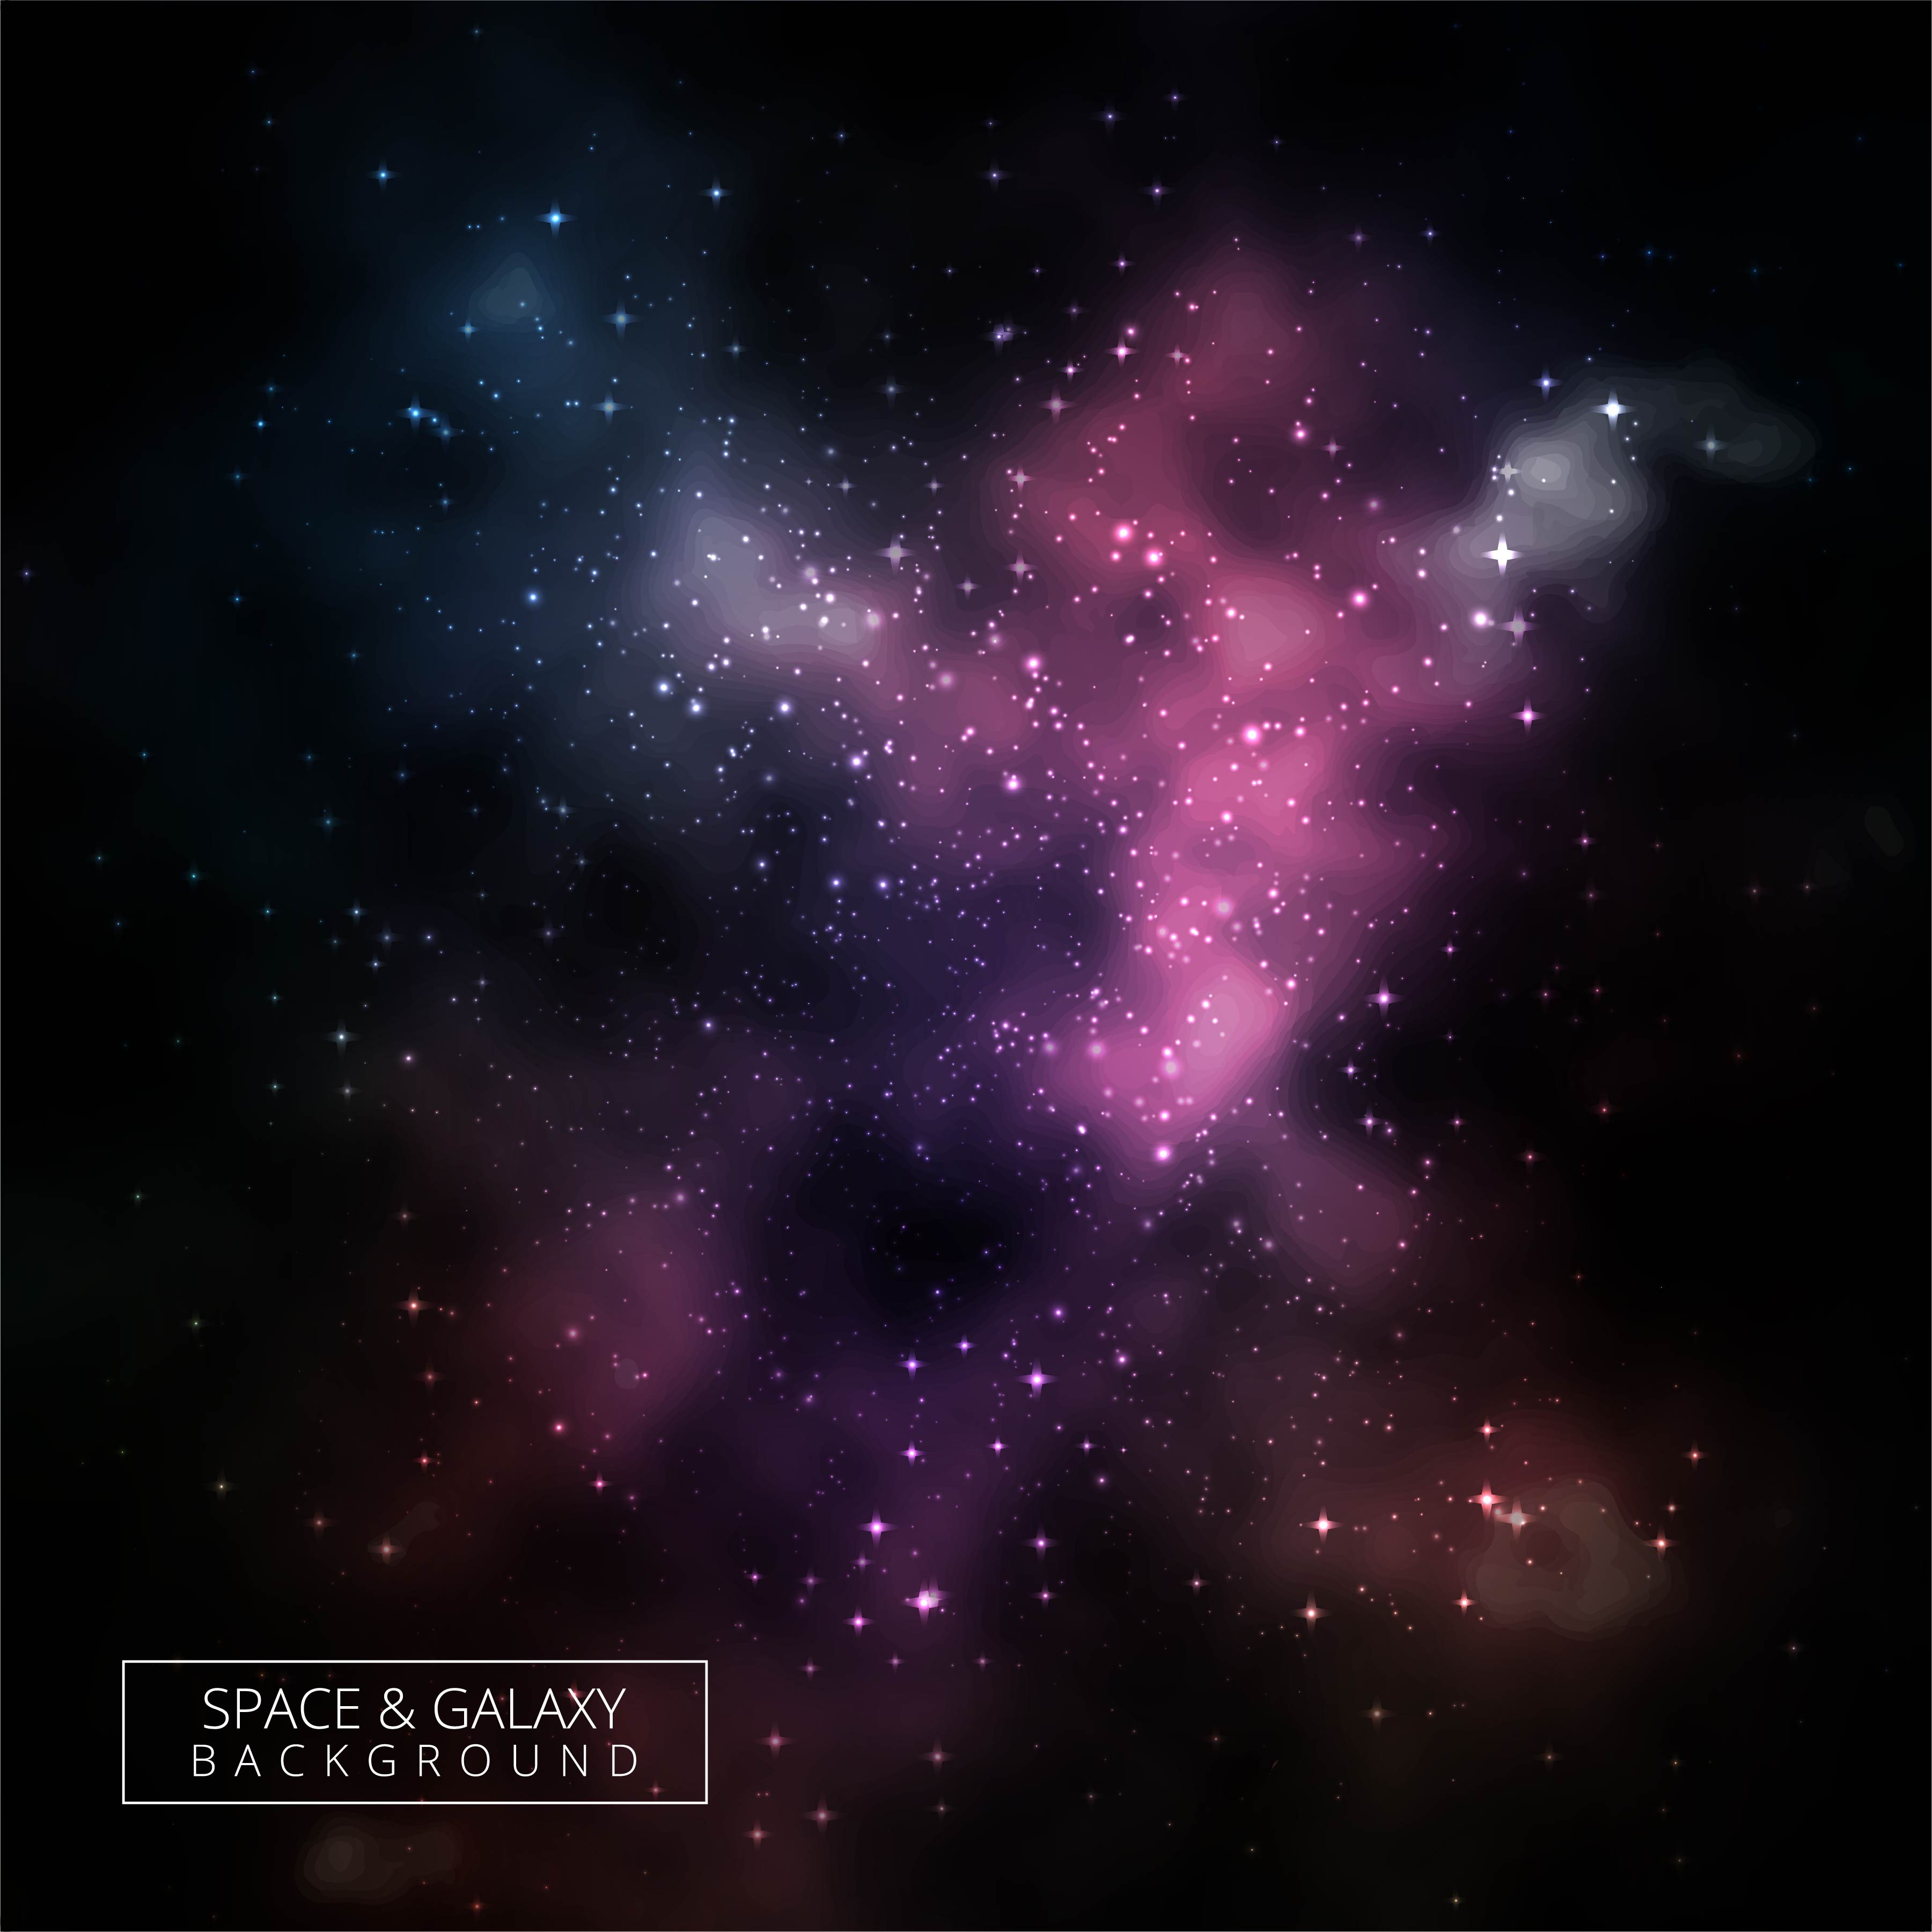 Abstract Dark Galaxy Background Vector Download Free Vectors